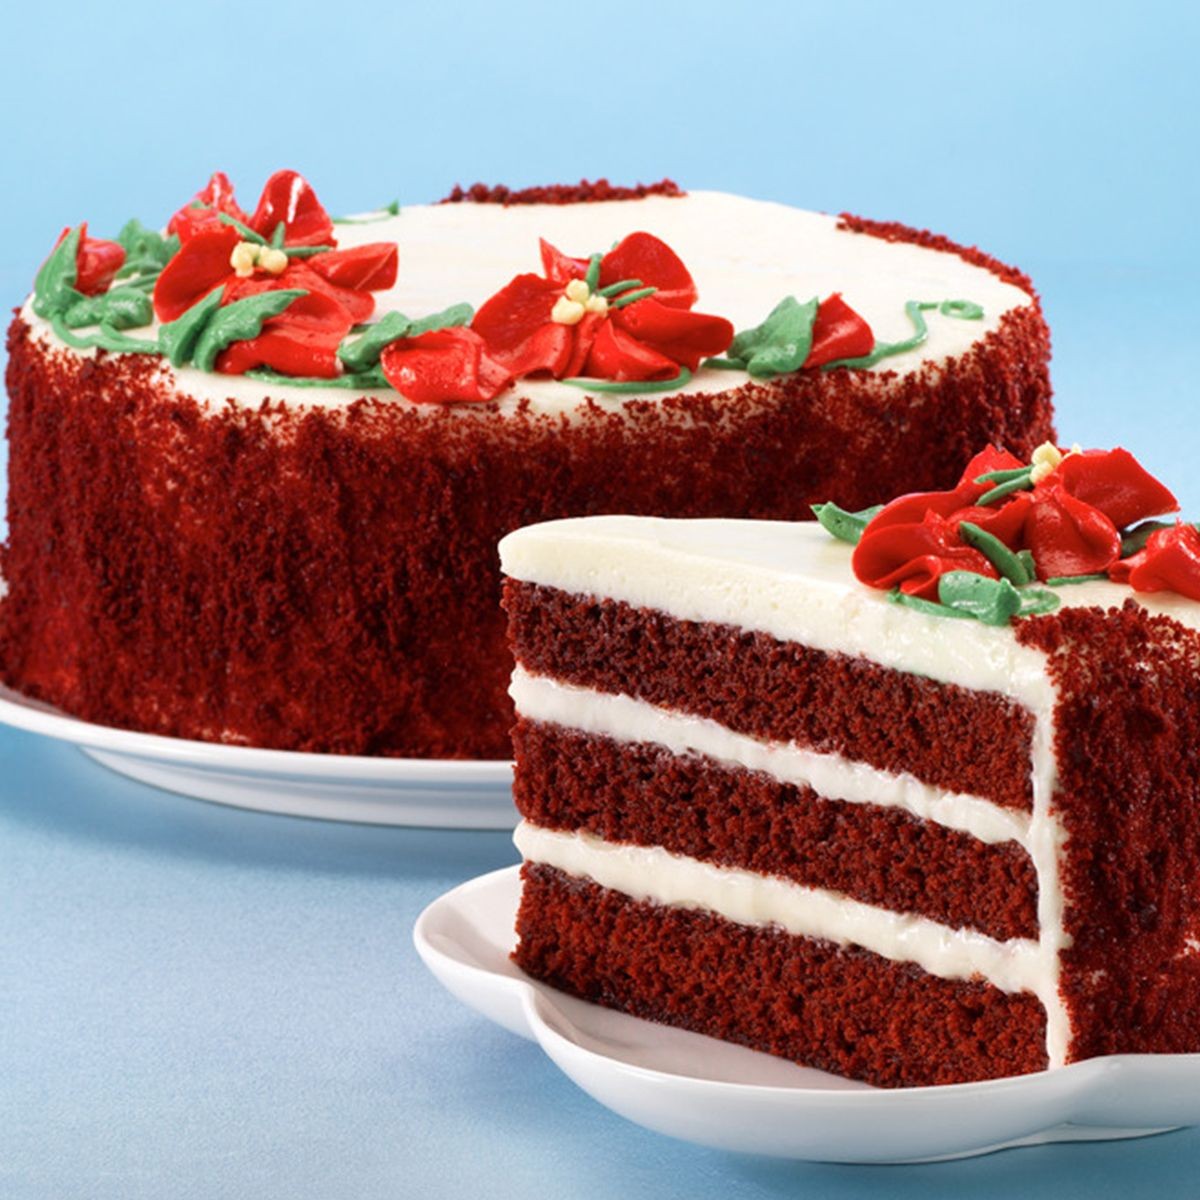 Enjoy the Recipe of Classic Red Velvet Cake - Ferns N Petals - Official